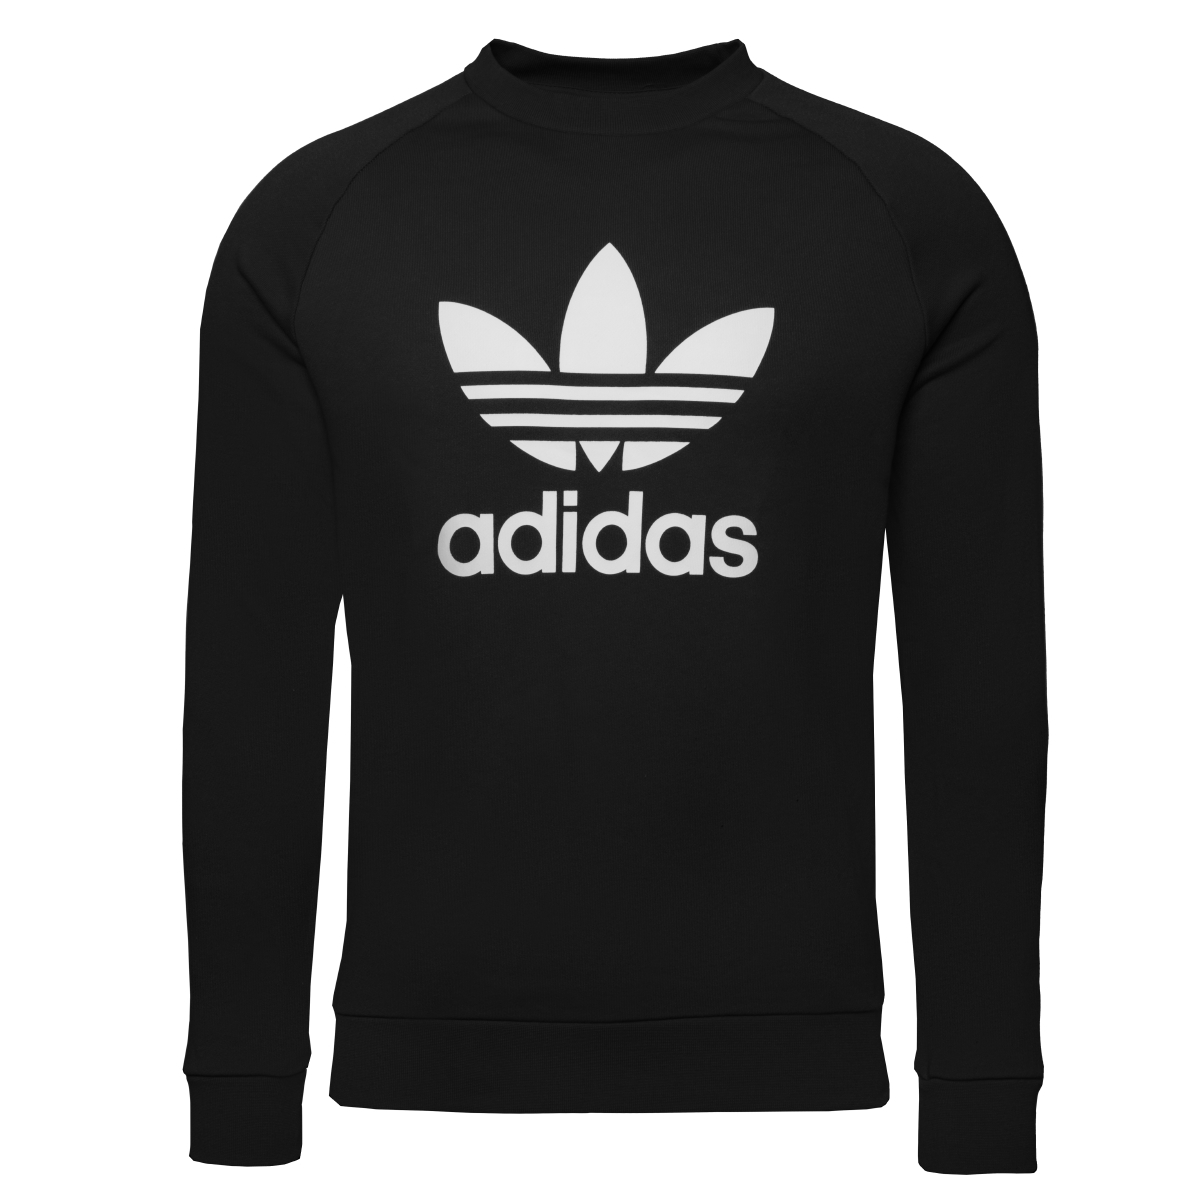 Adidas Adicolor Trefoil Crew Neck Sweatshirt